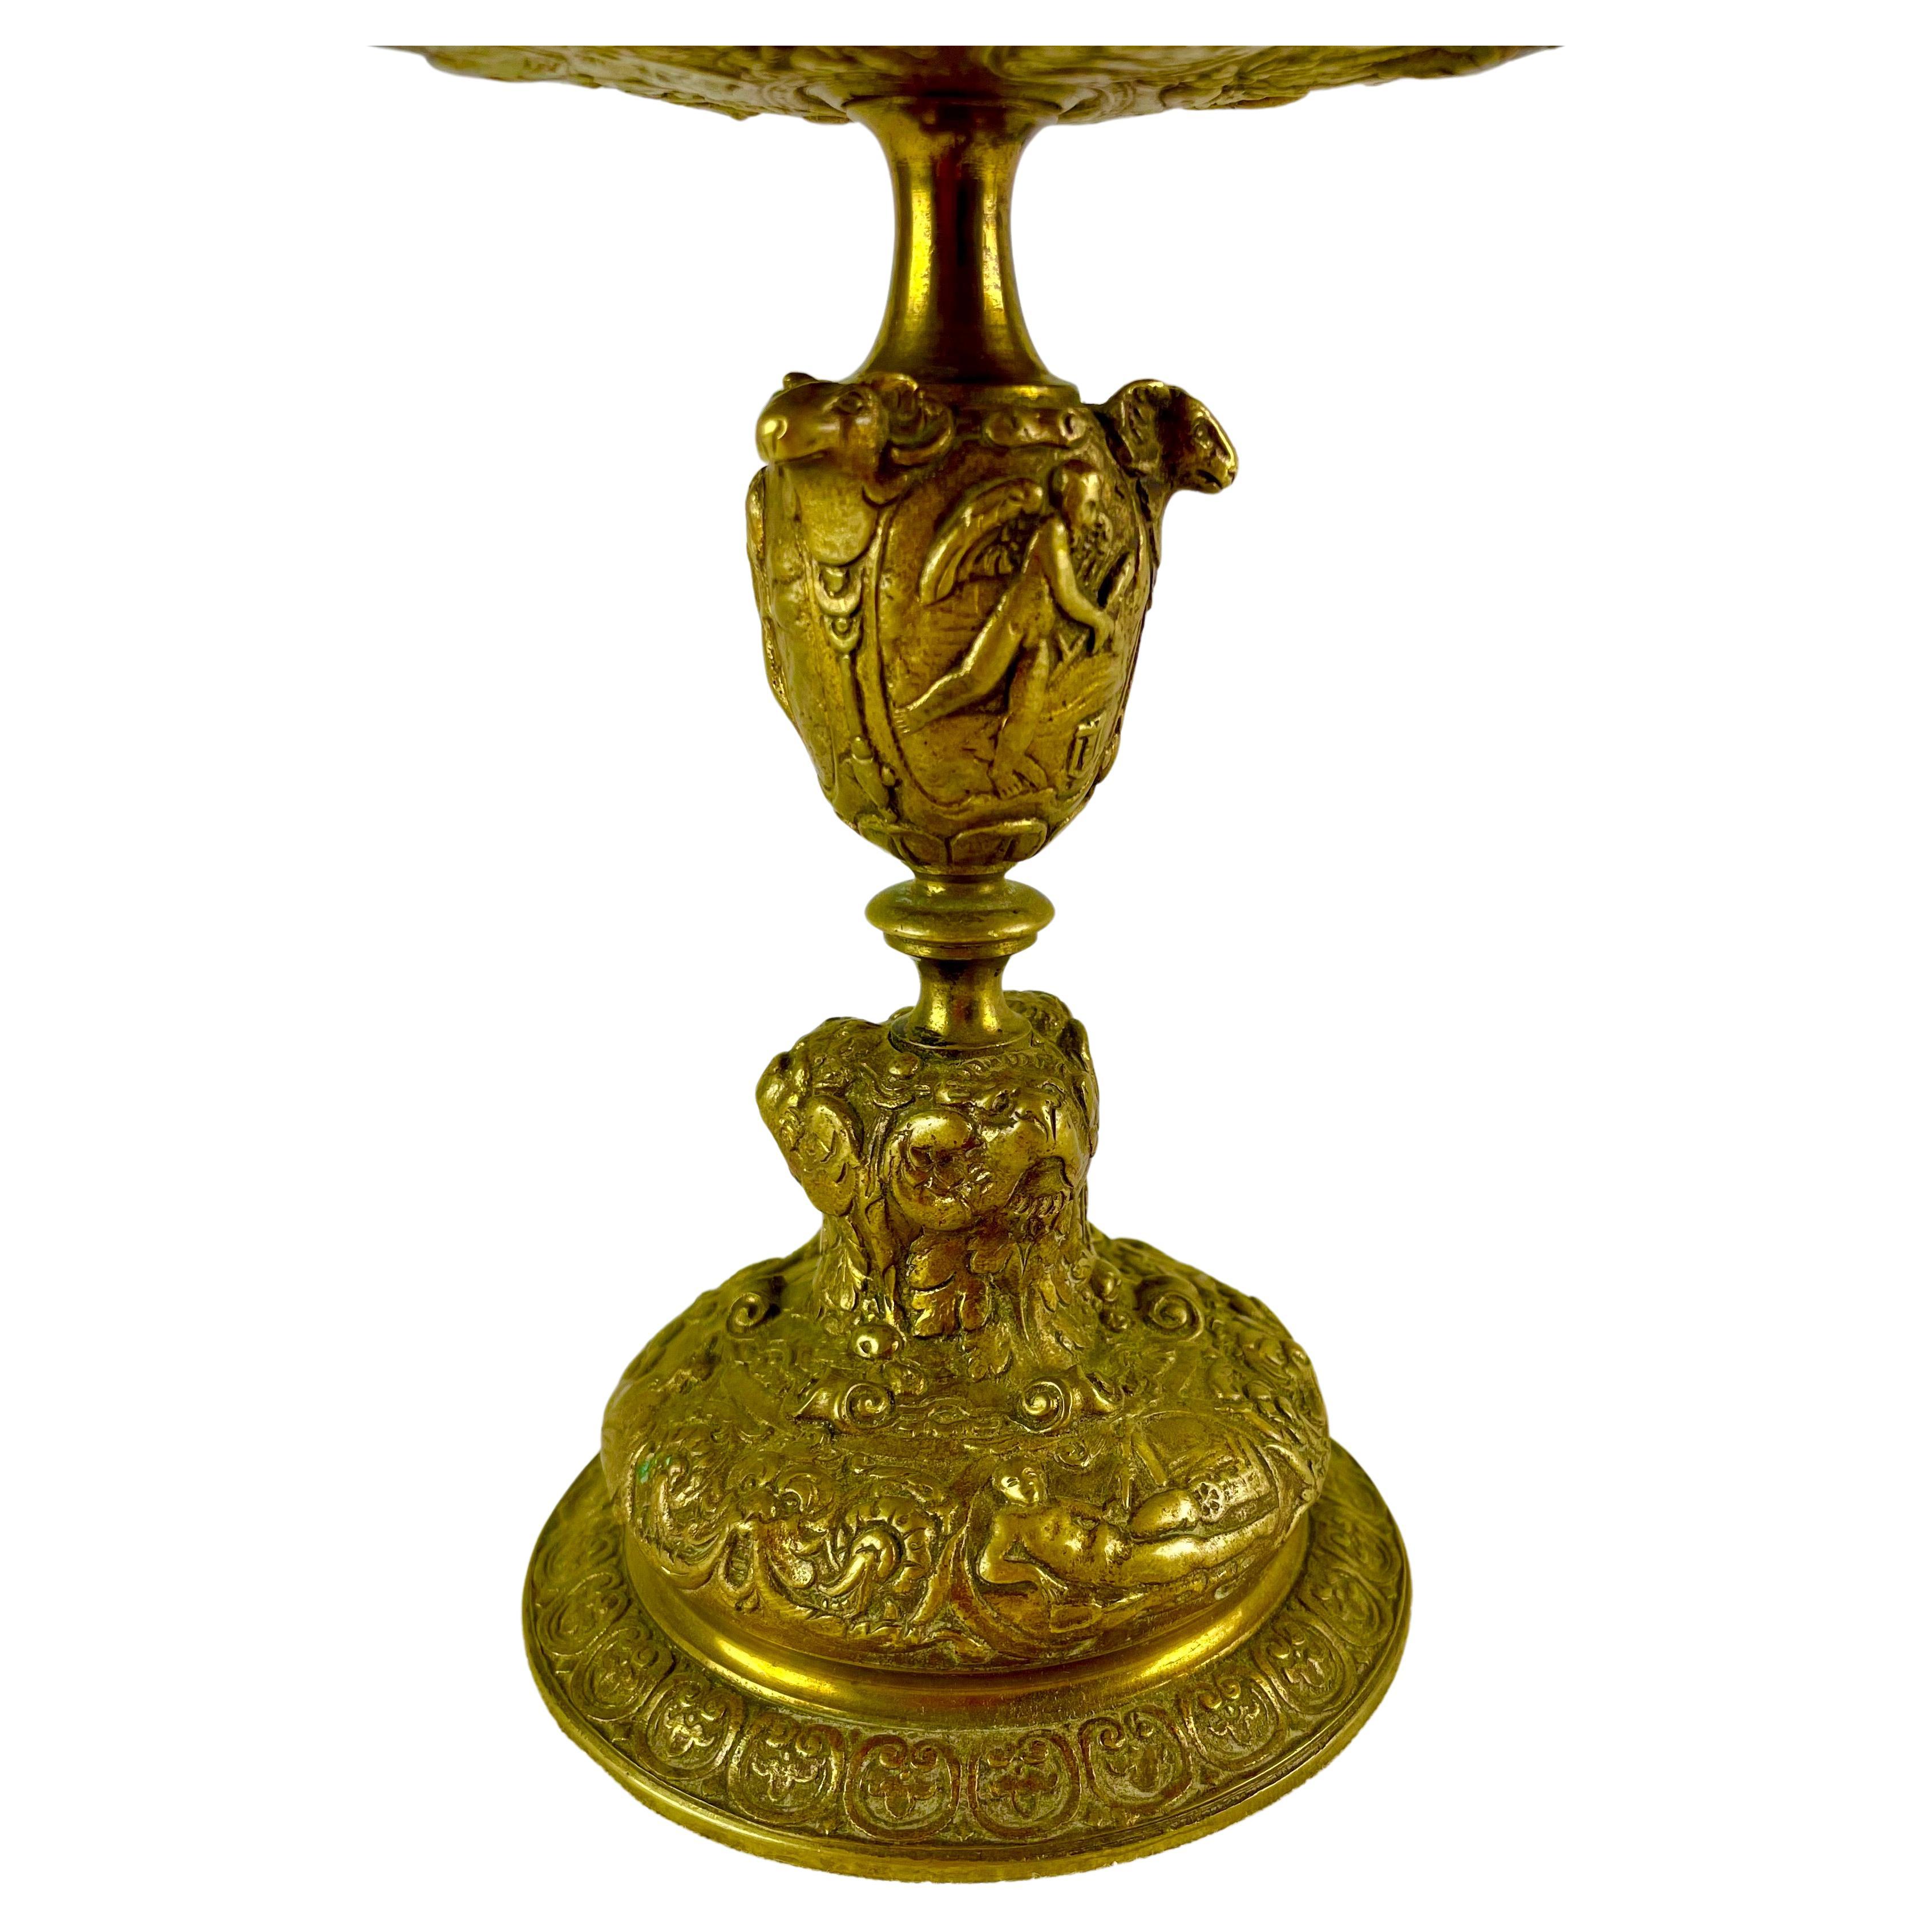 Tazza Neo Renaissance Pair of Cups Gilt Bronze Decor Deities of Antiquity 19thC. For Sale 1